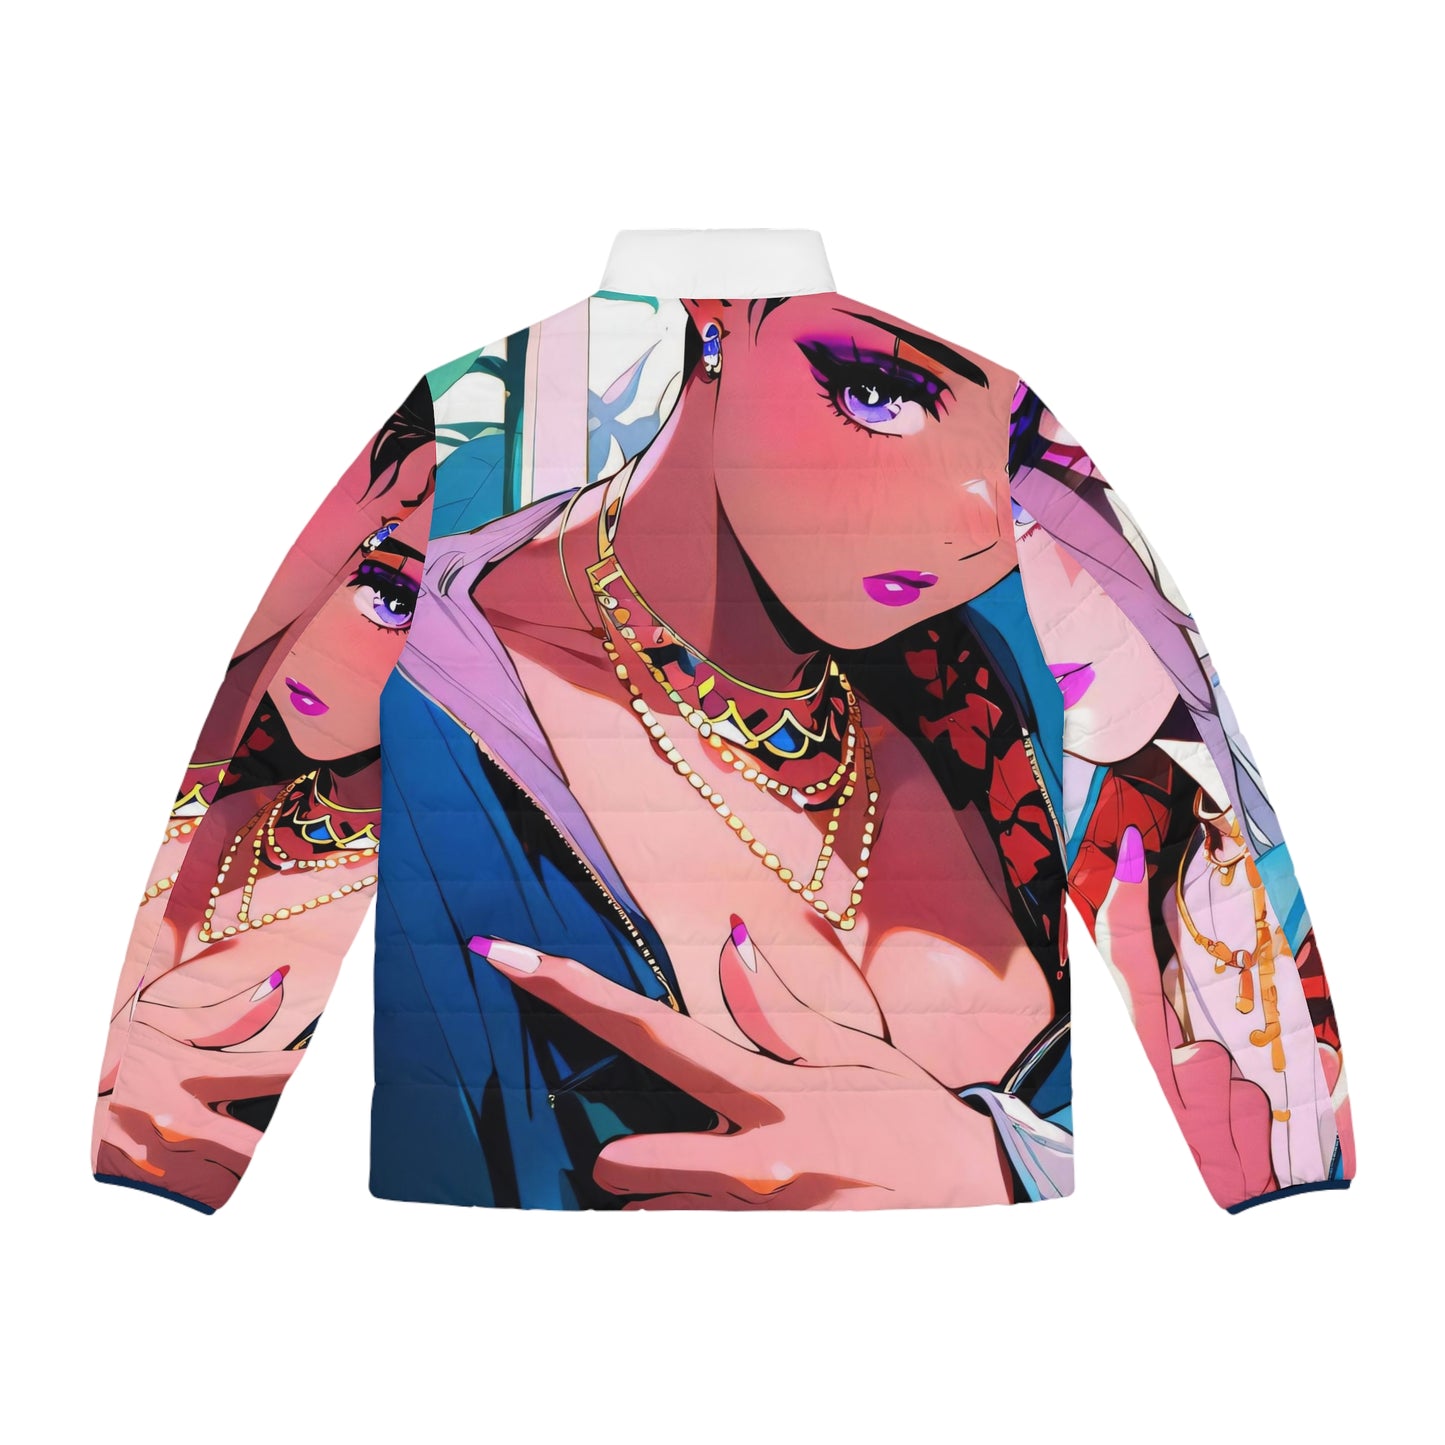 Anime Style Art Men's Puffer Jacket (AOP)- "Maniac"